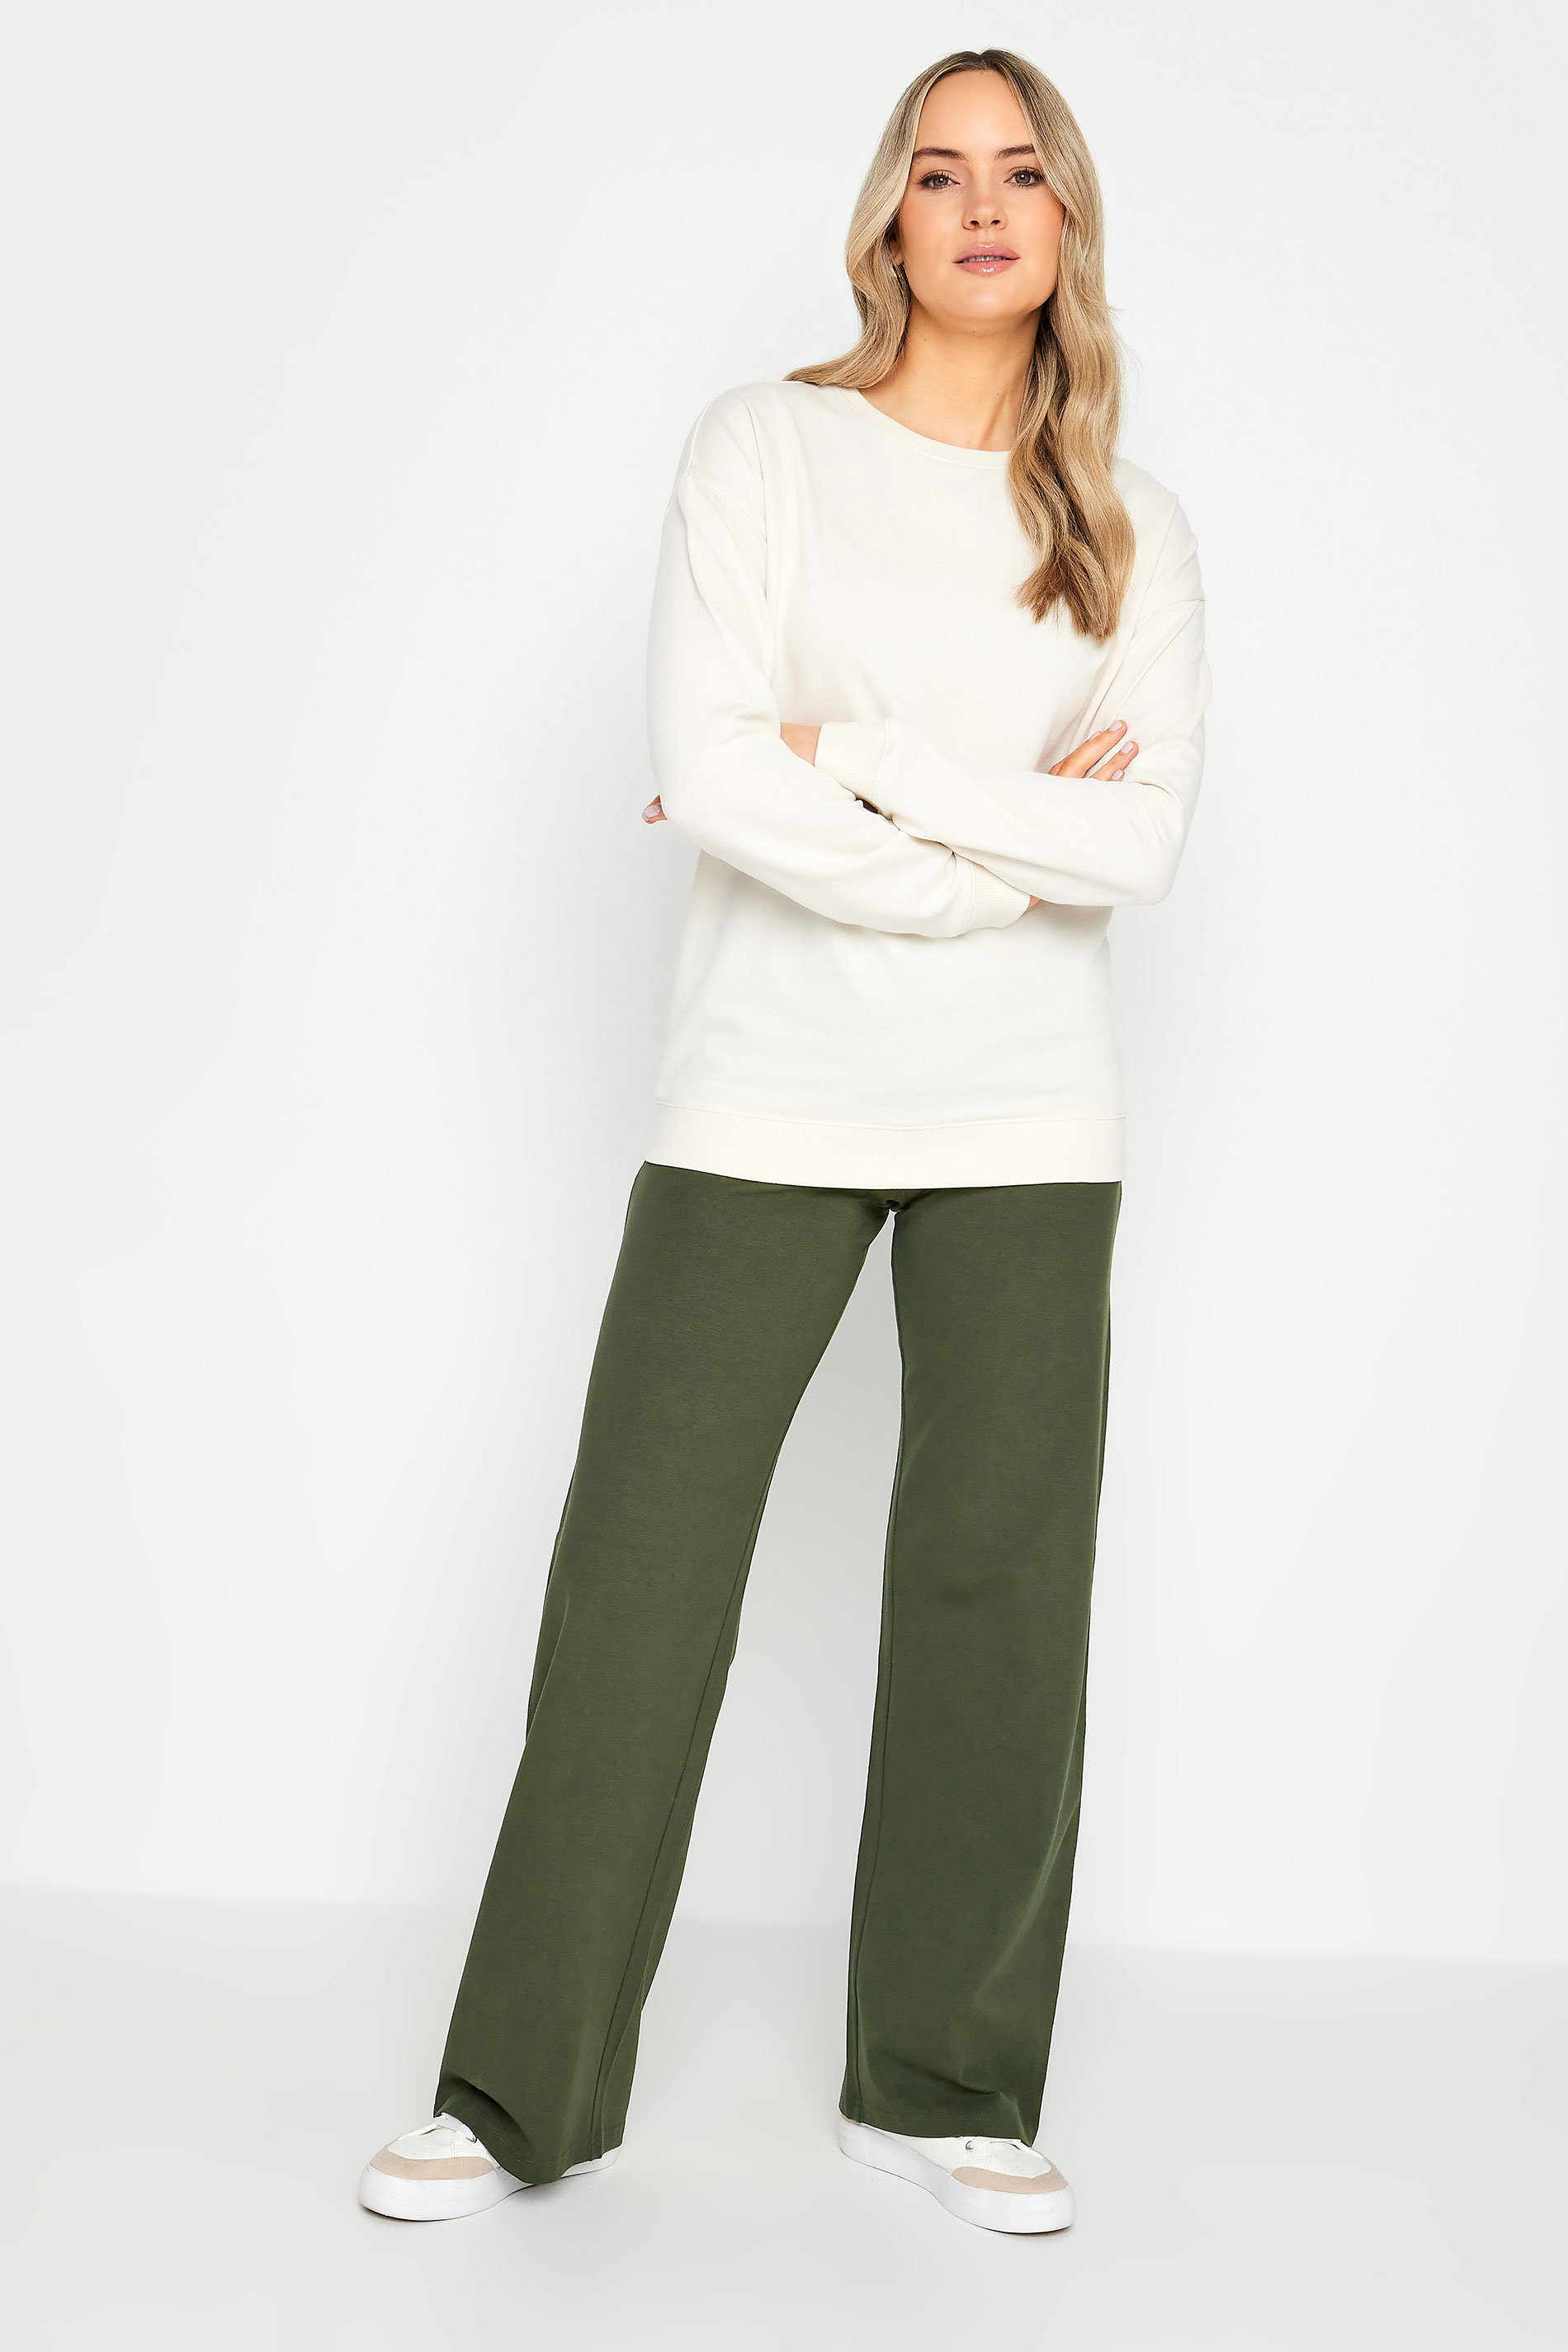 LTS Tall Womens Khaki Green Wide Leg Yoga Pants | Long Tall Sally 2